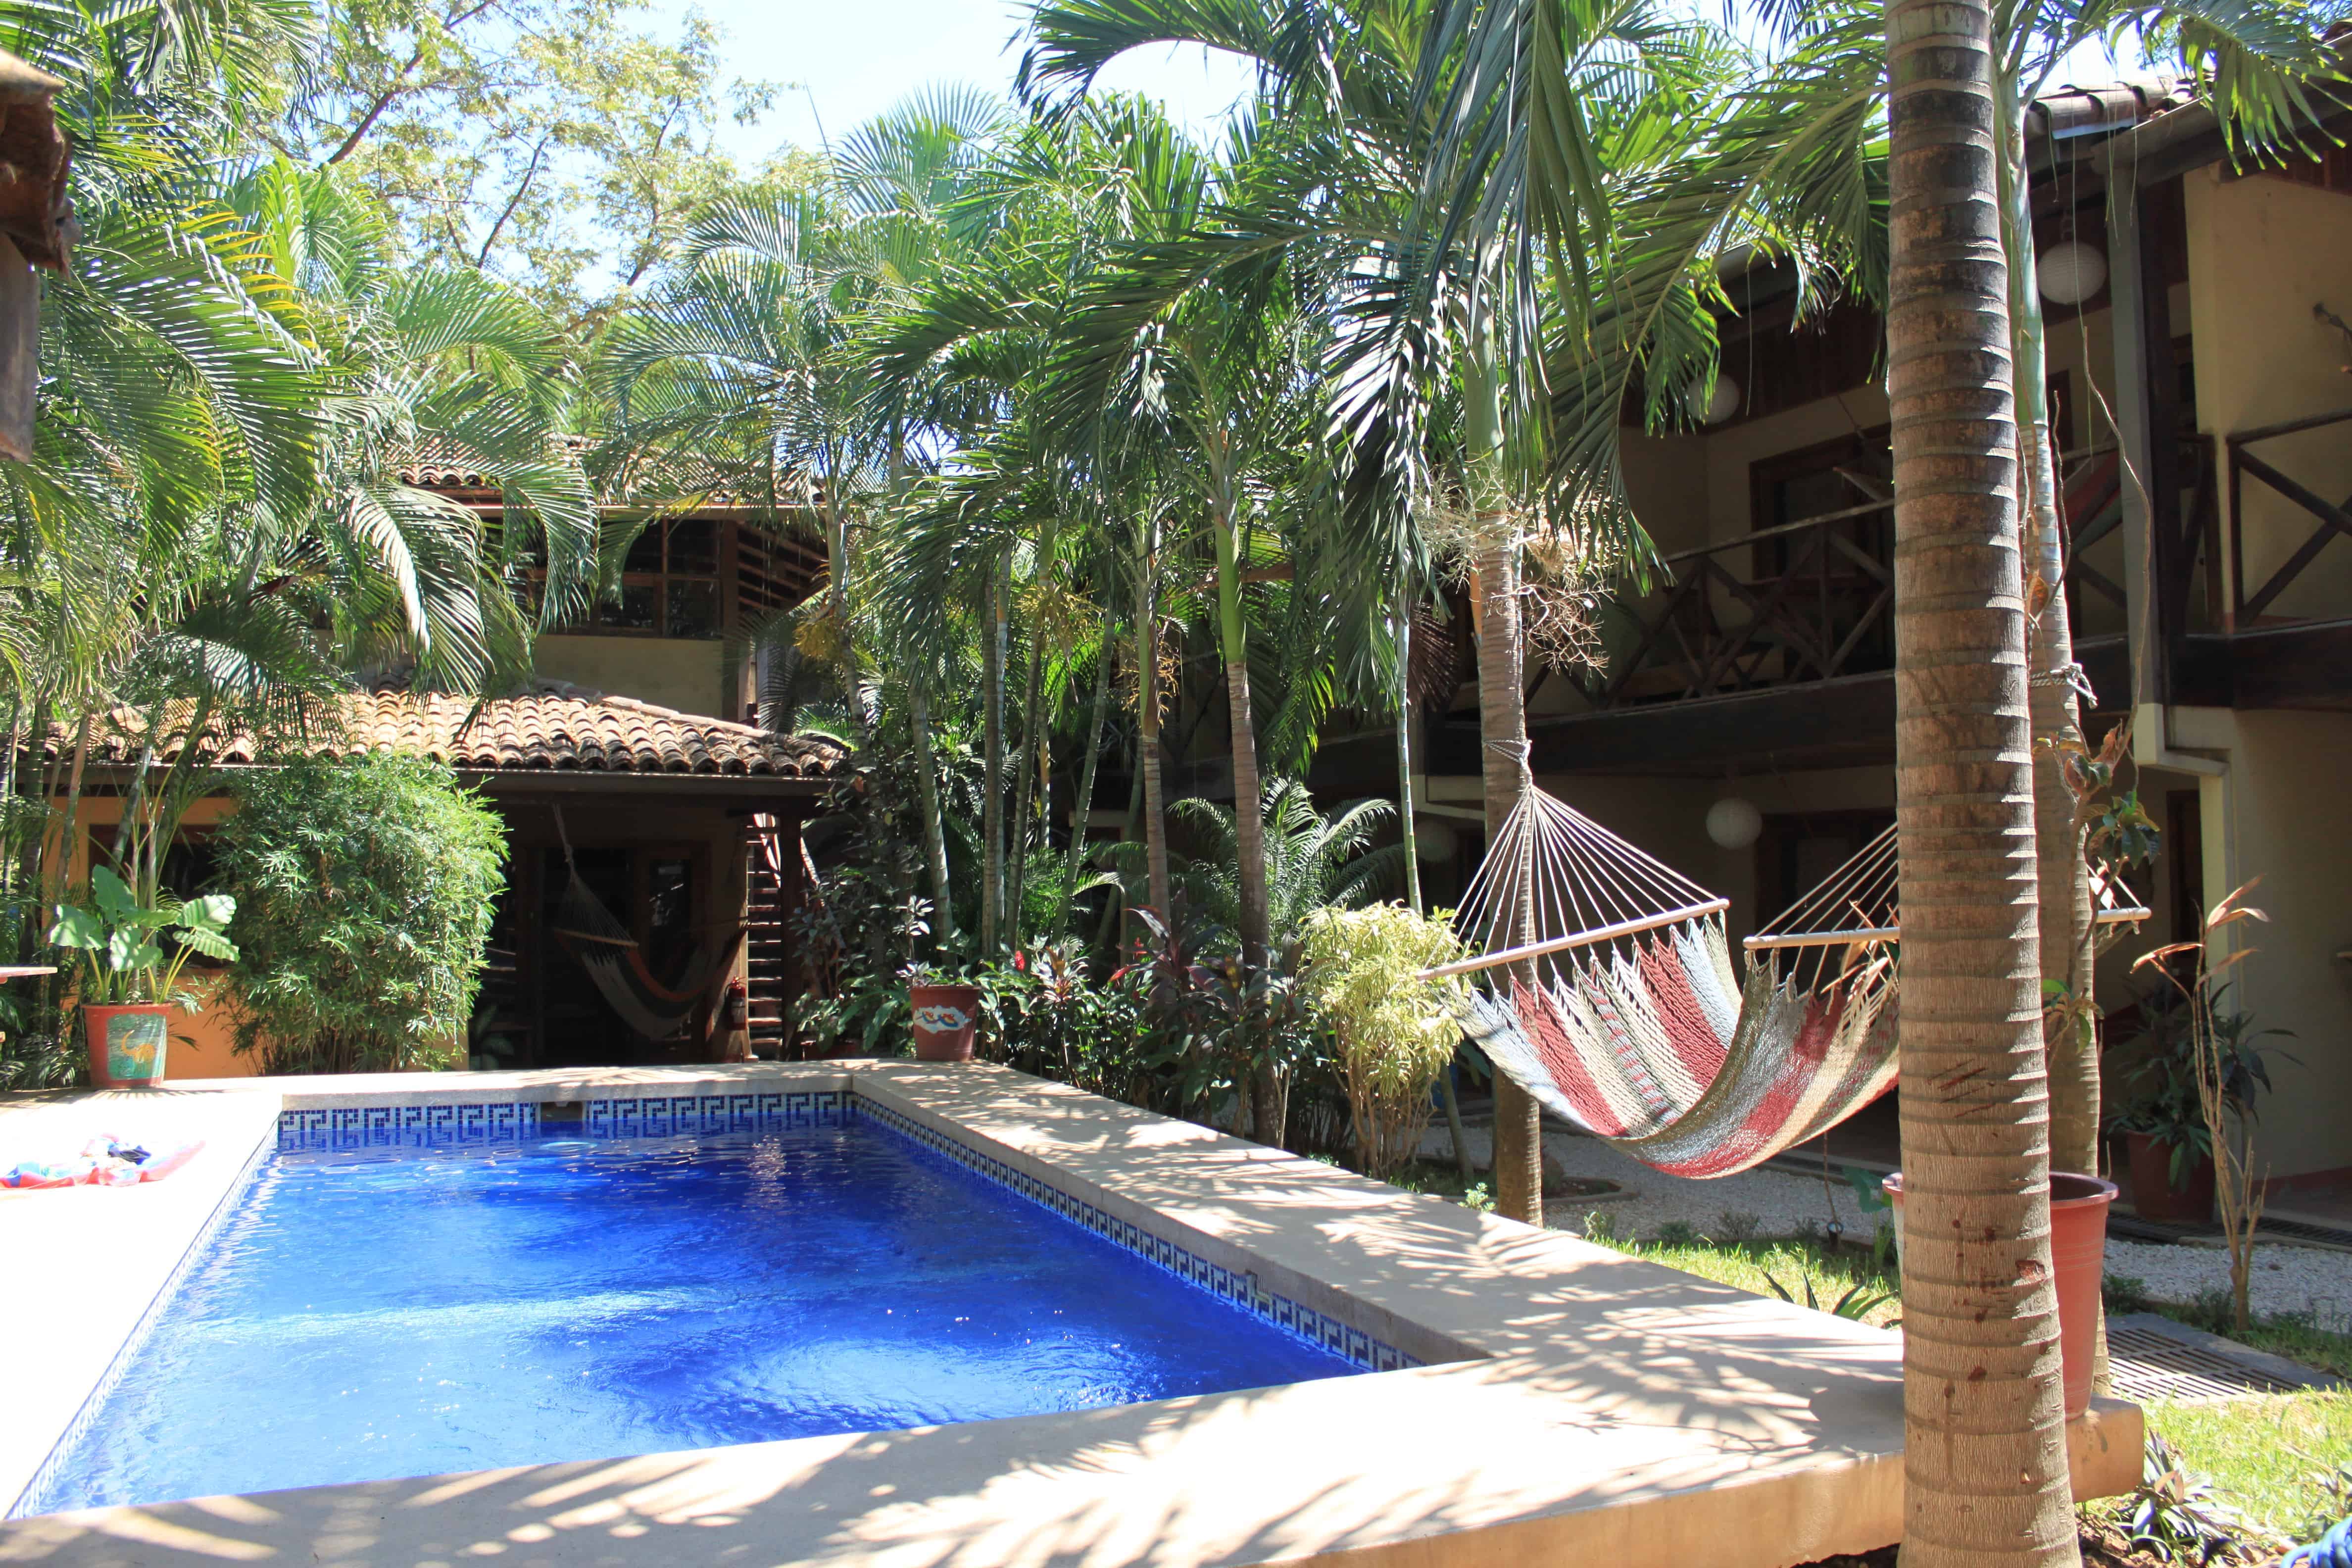 Our hostel in Tamarindo, Costa Rica